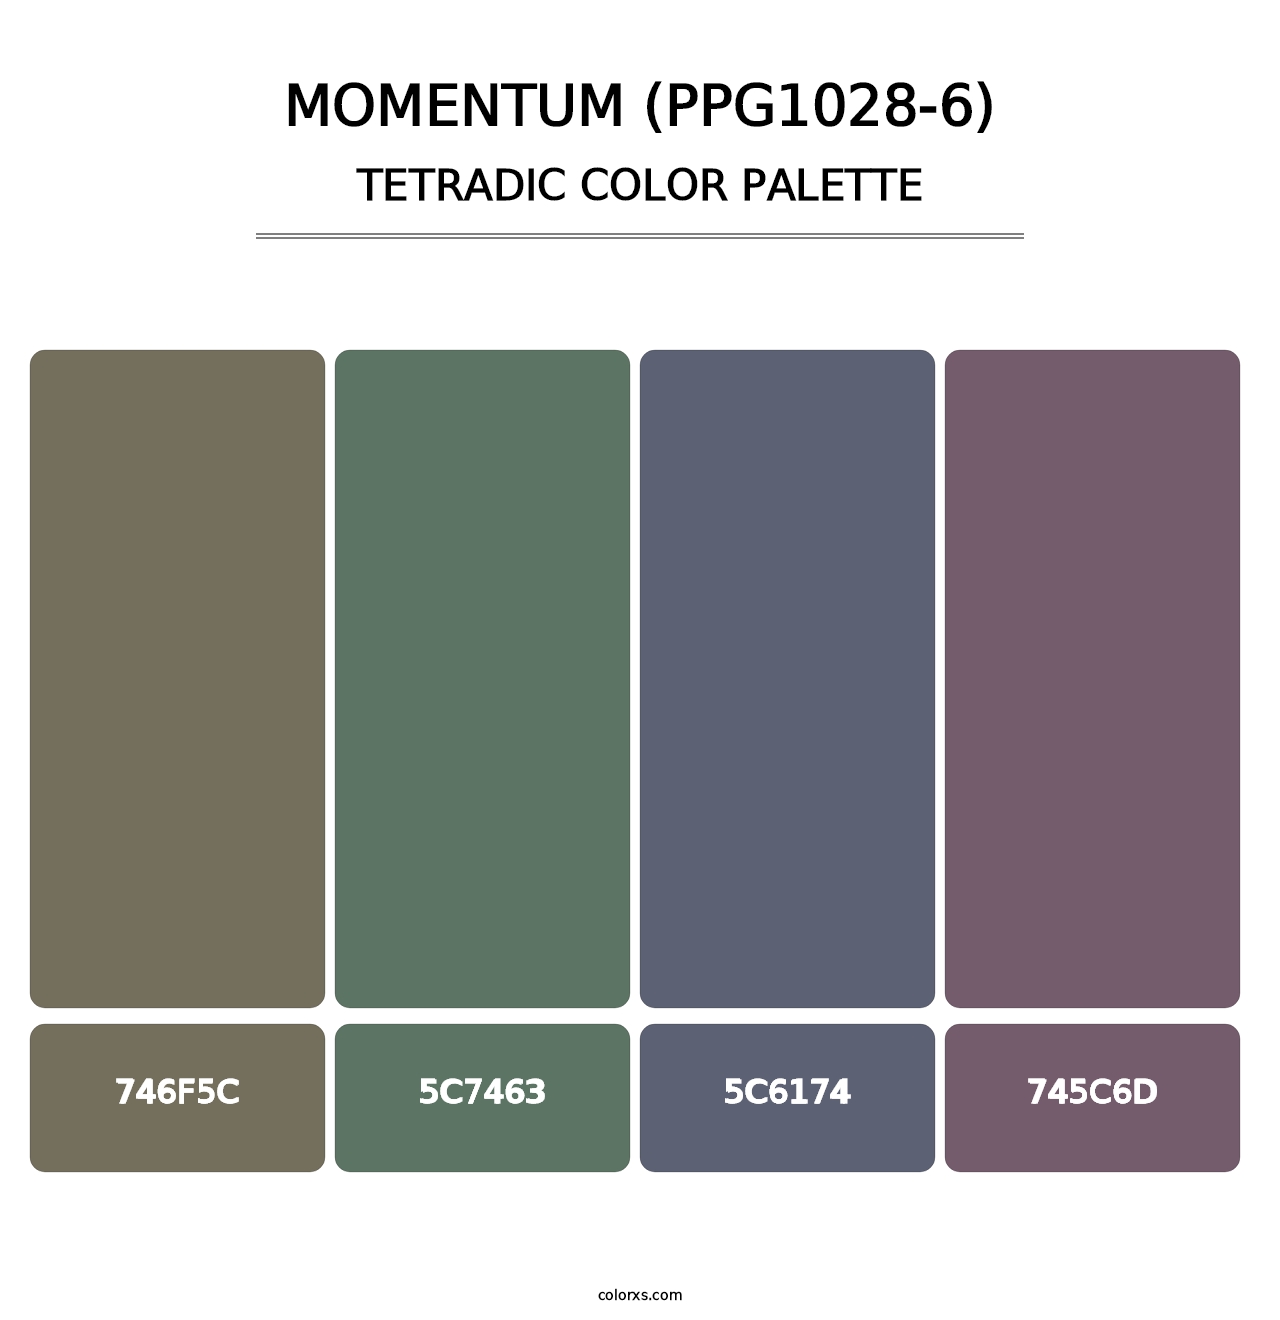 Momentum (PPG1028-6) - Tetradic Color Palette